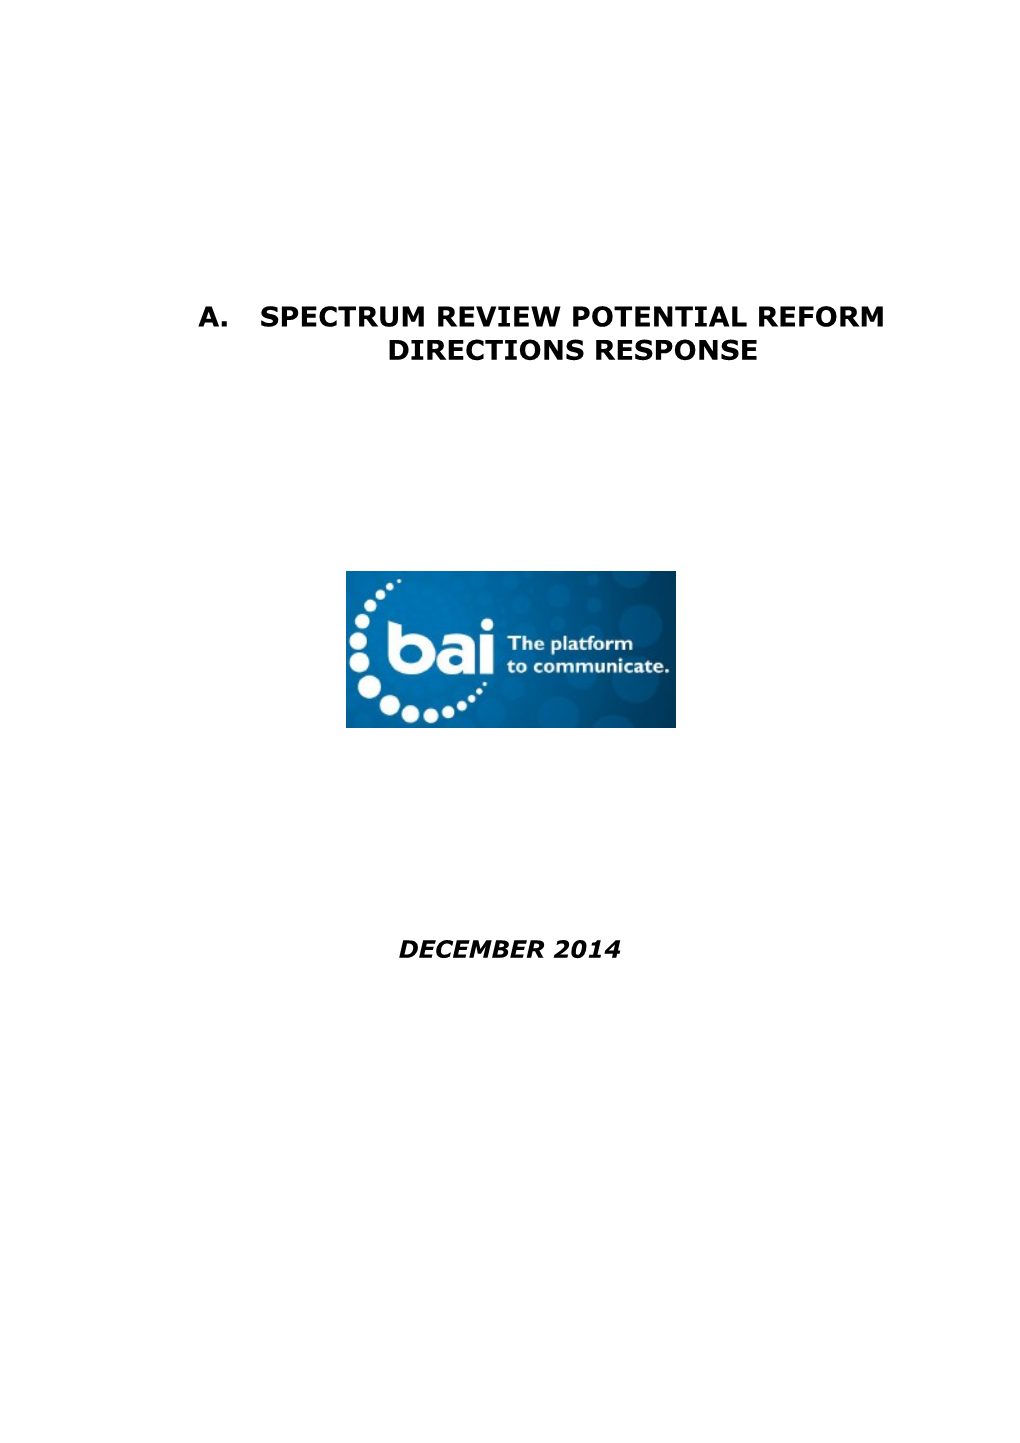 Spectrum Review Potential Reform Directions Response